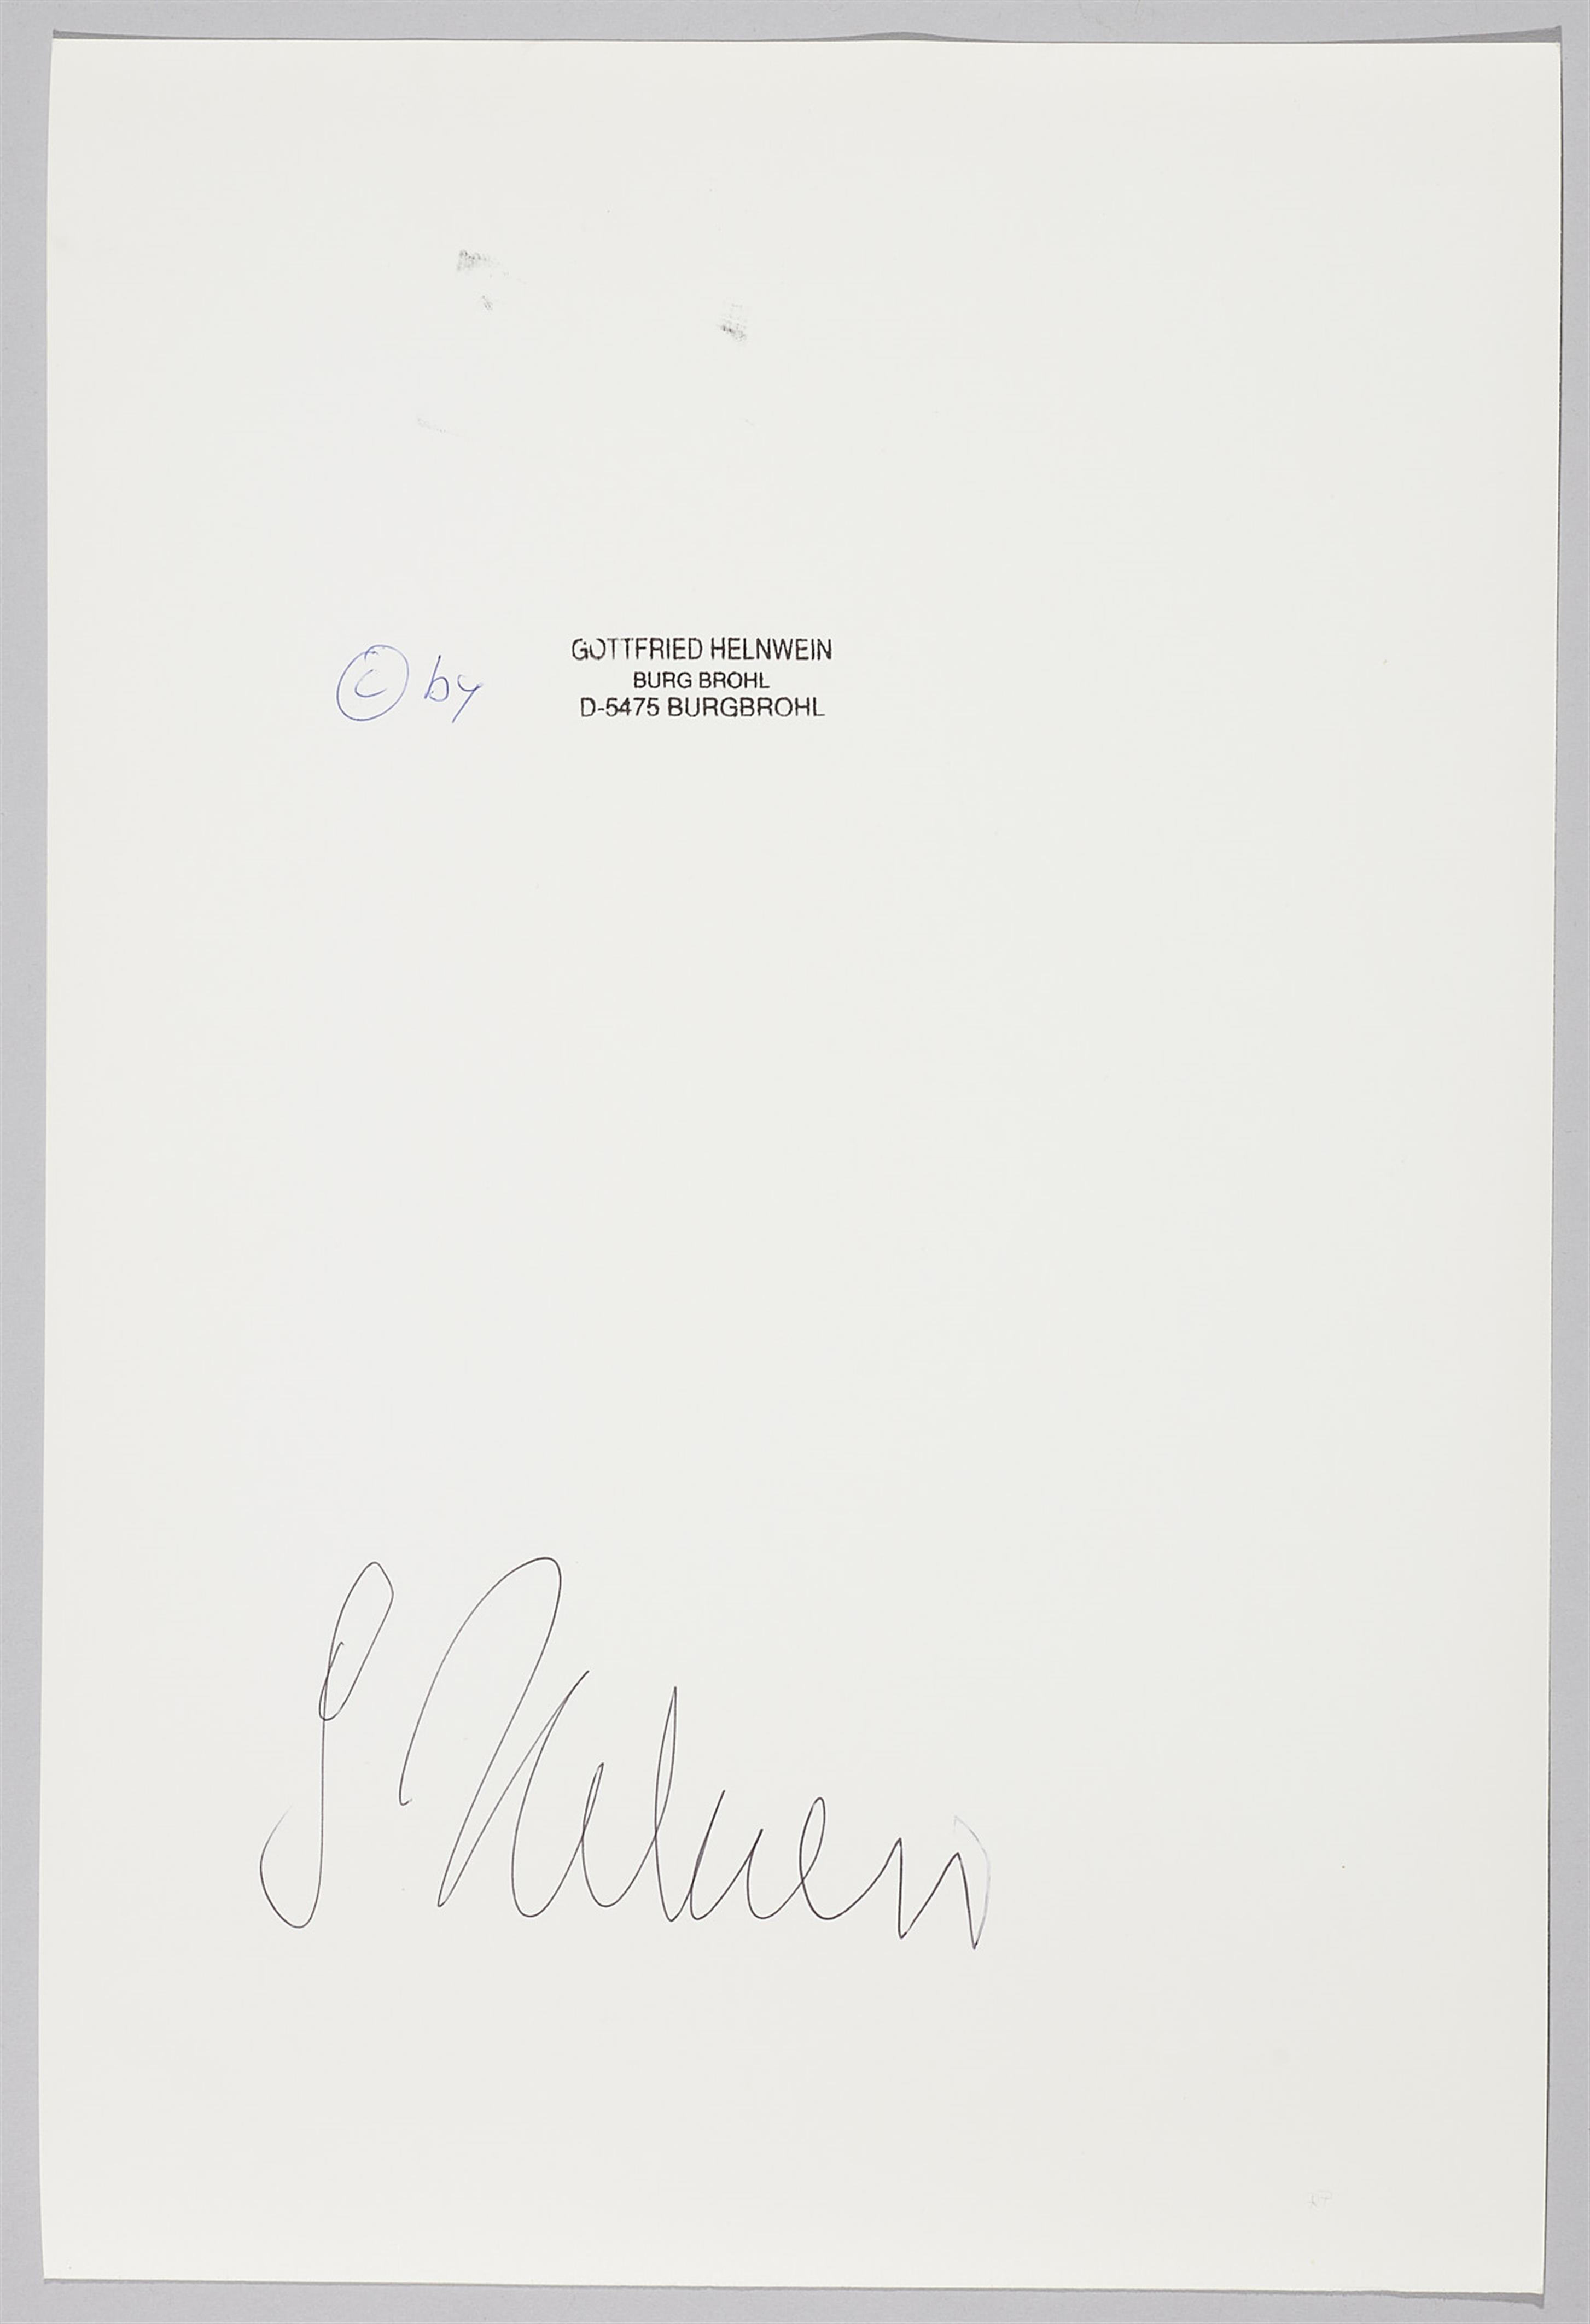 Gottfried Helnwein - Charles Bukowski, Los Angeles - image-2